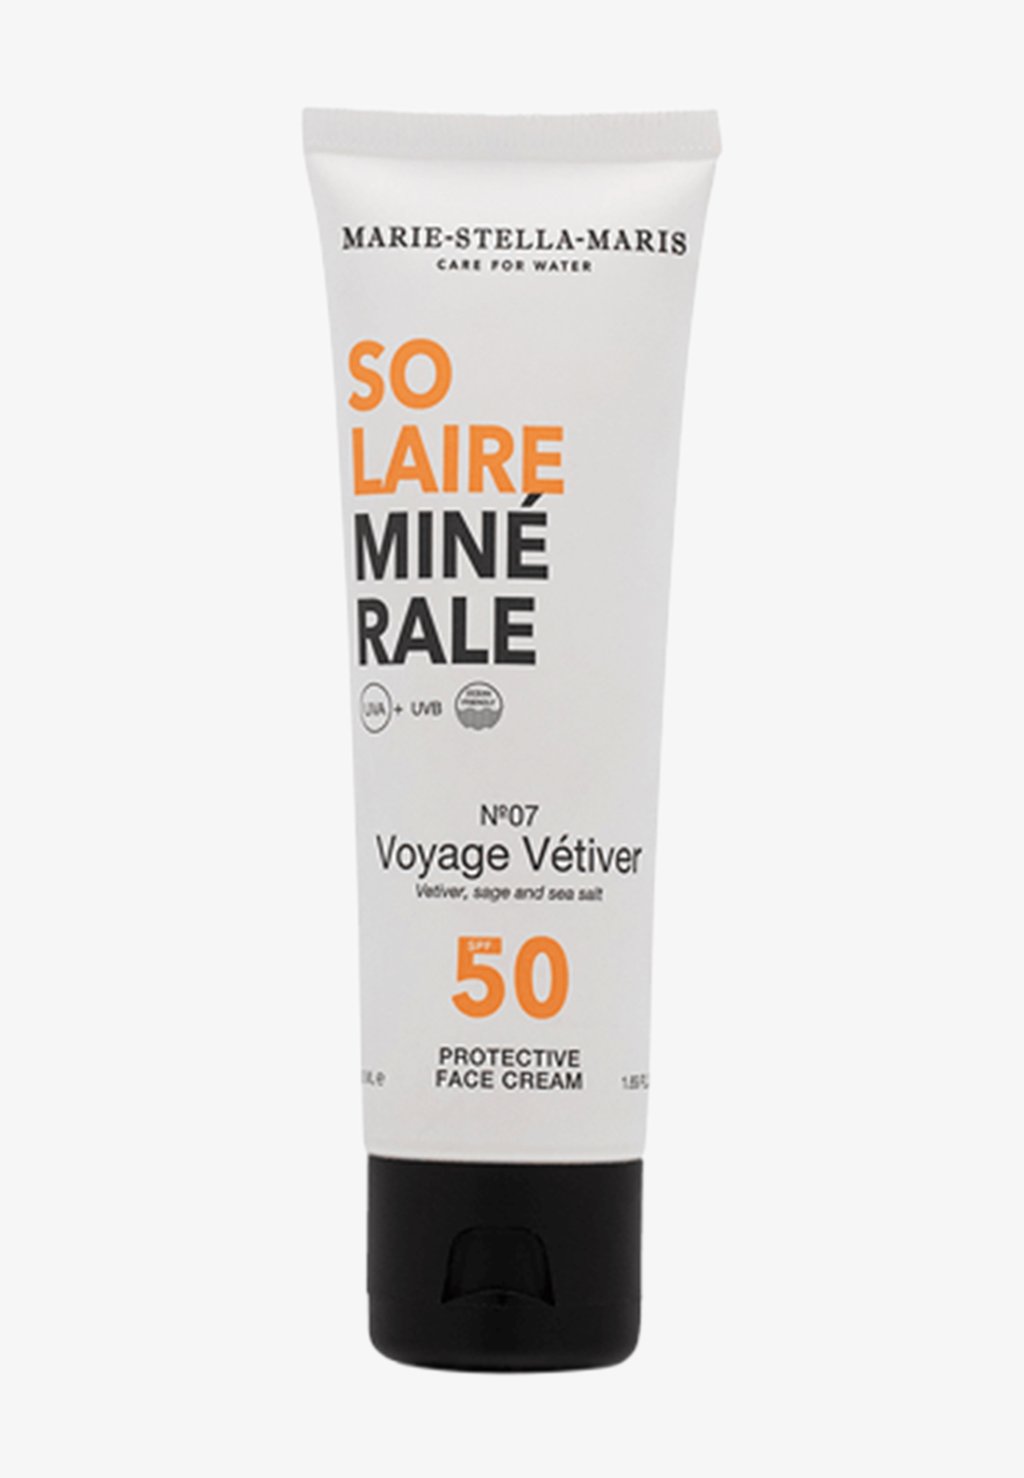 Дневной крем Protective Face Cream Spf 50 Voyage Vétiver Marie-Stella-Maris